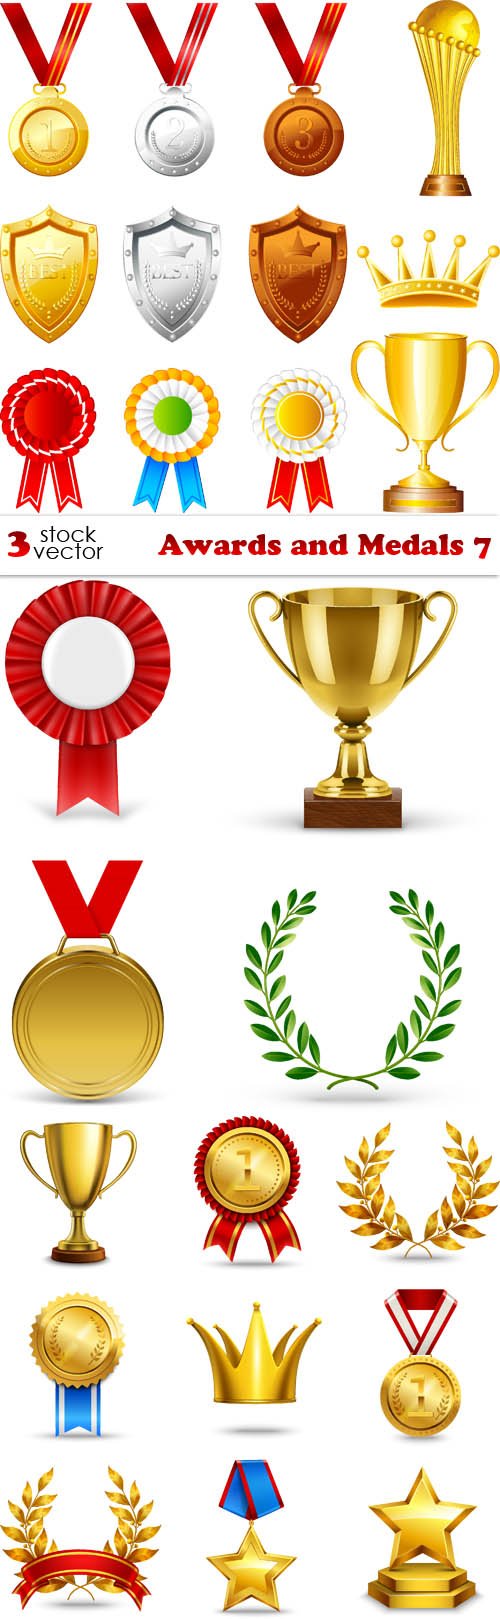 Vectors - Awards and Medals 7